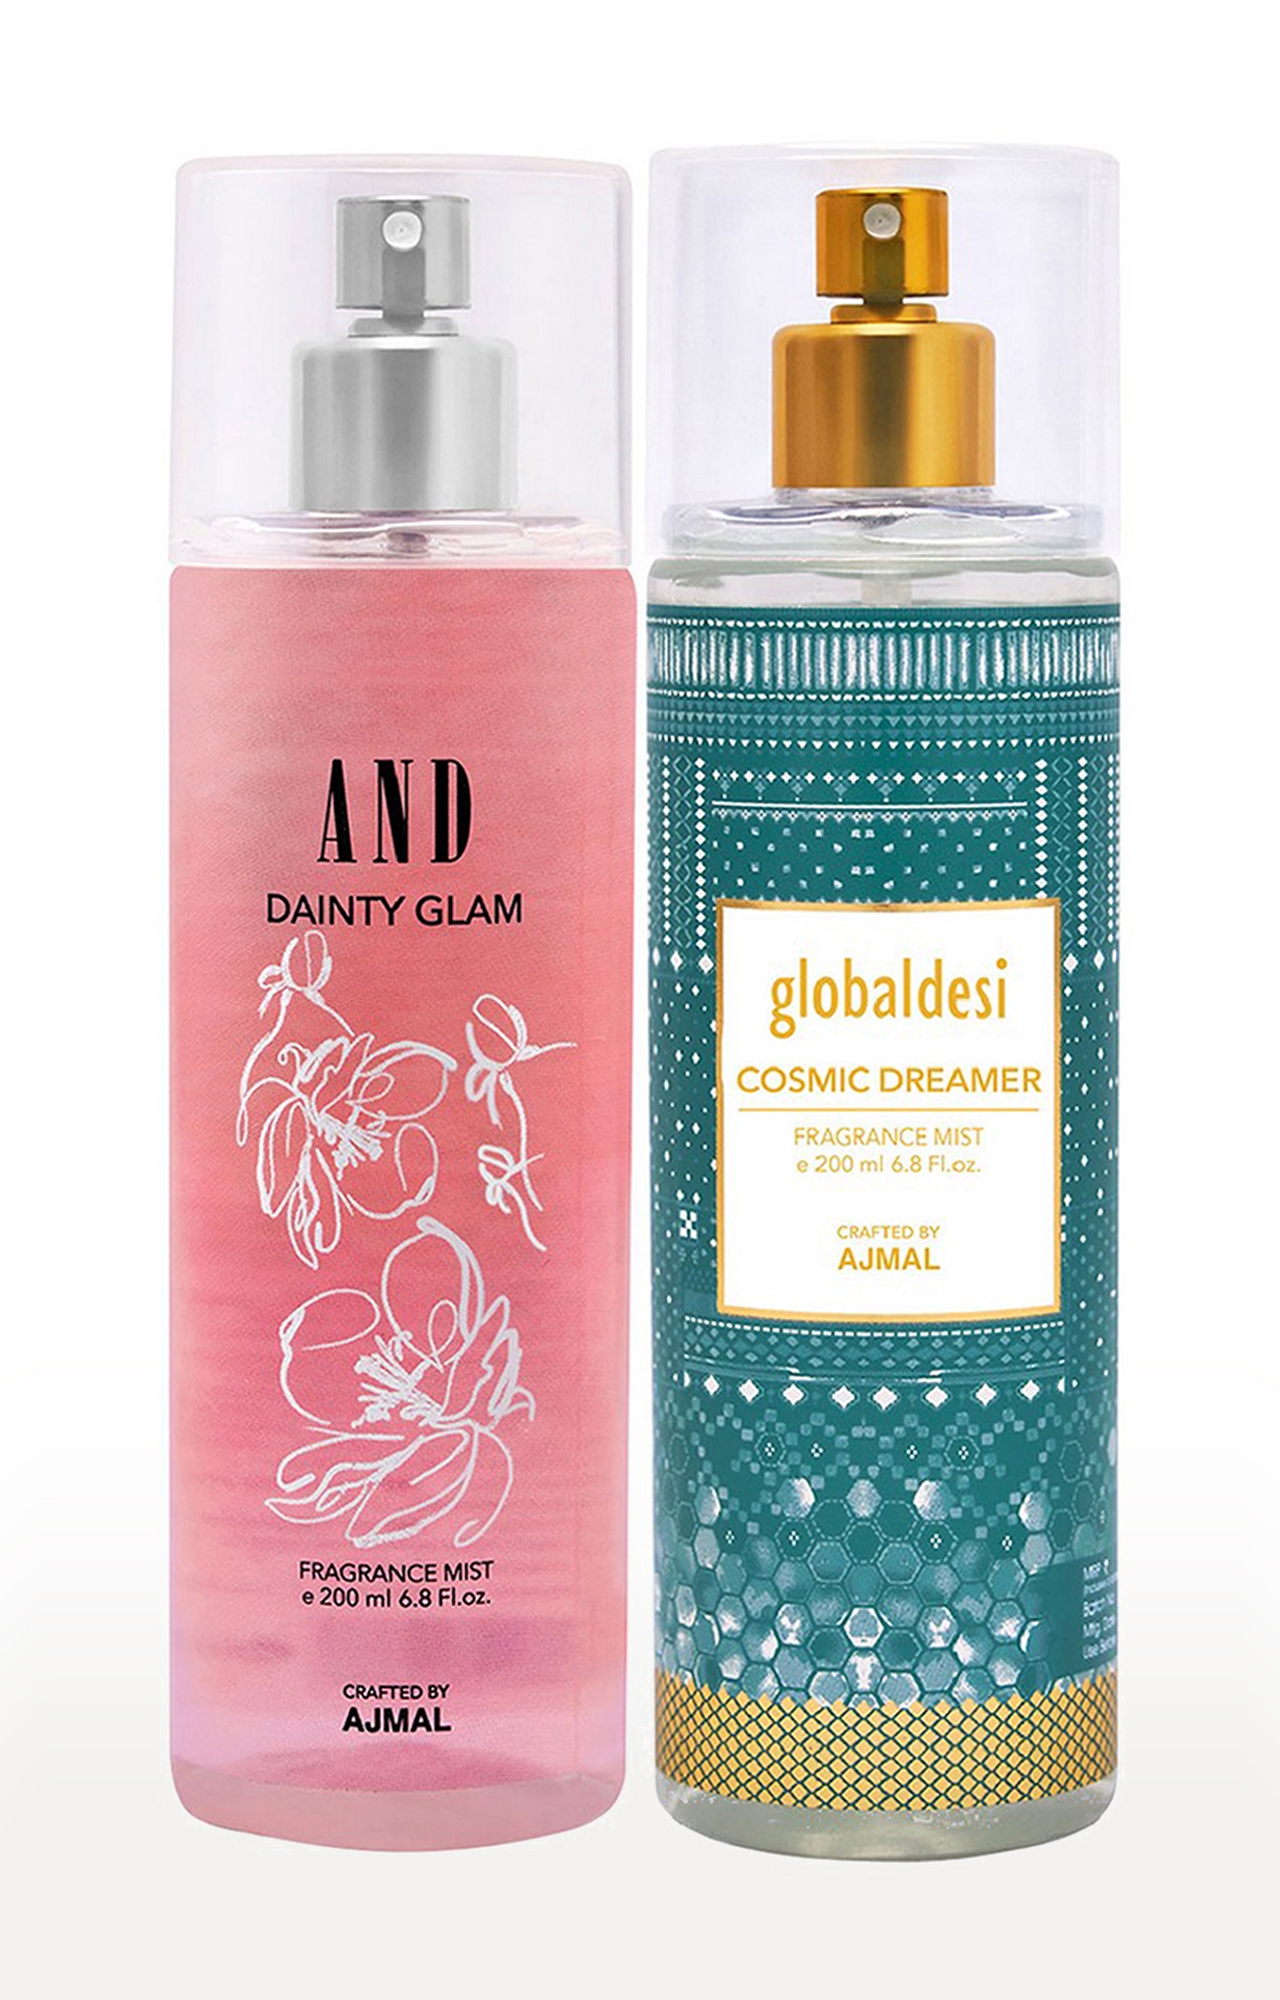 AND Dainty Glam Body Mist 200ML & Global Desi Cosmic Dreamer Body Mist 200ML Long Lasting Scent Spray Gift For Women Perfume FREE